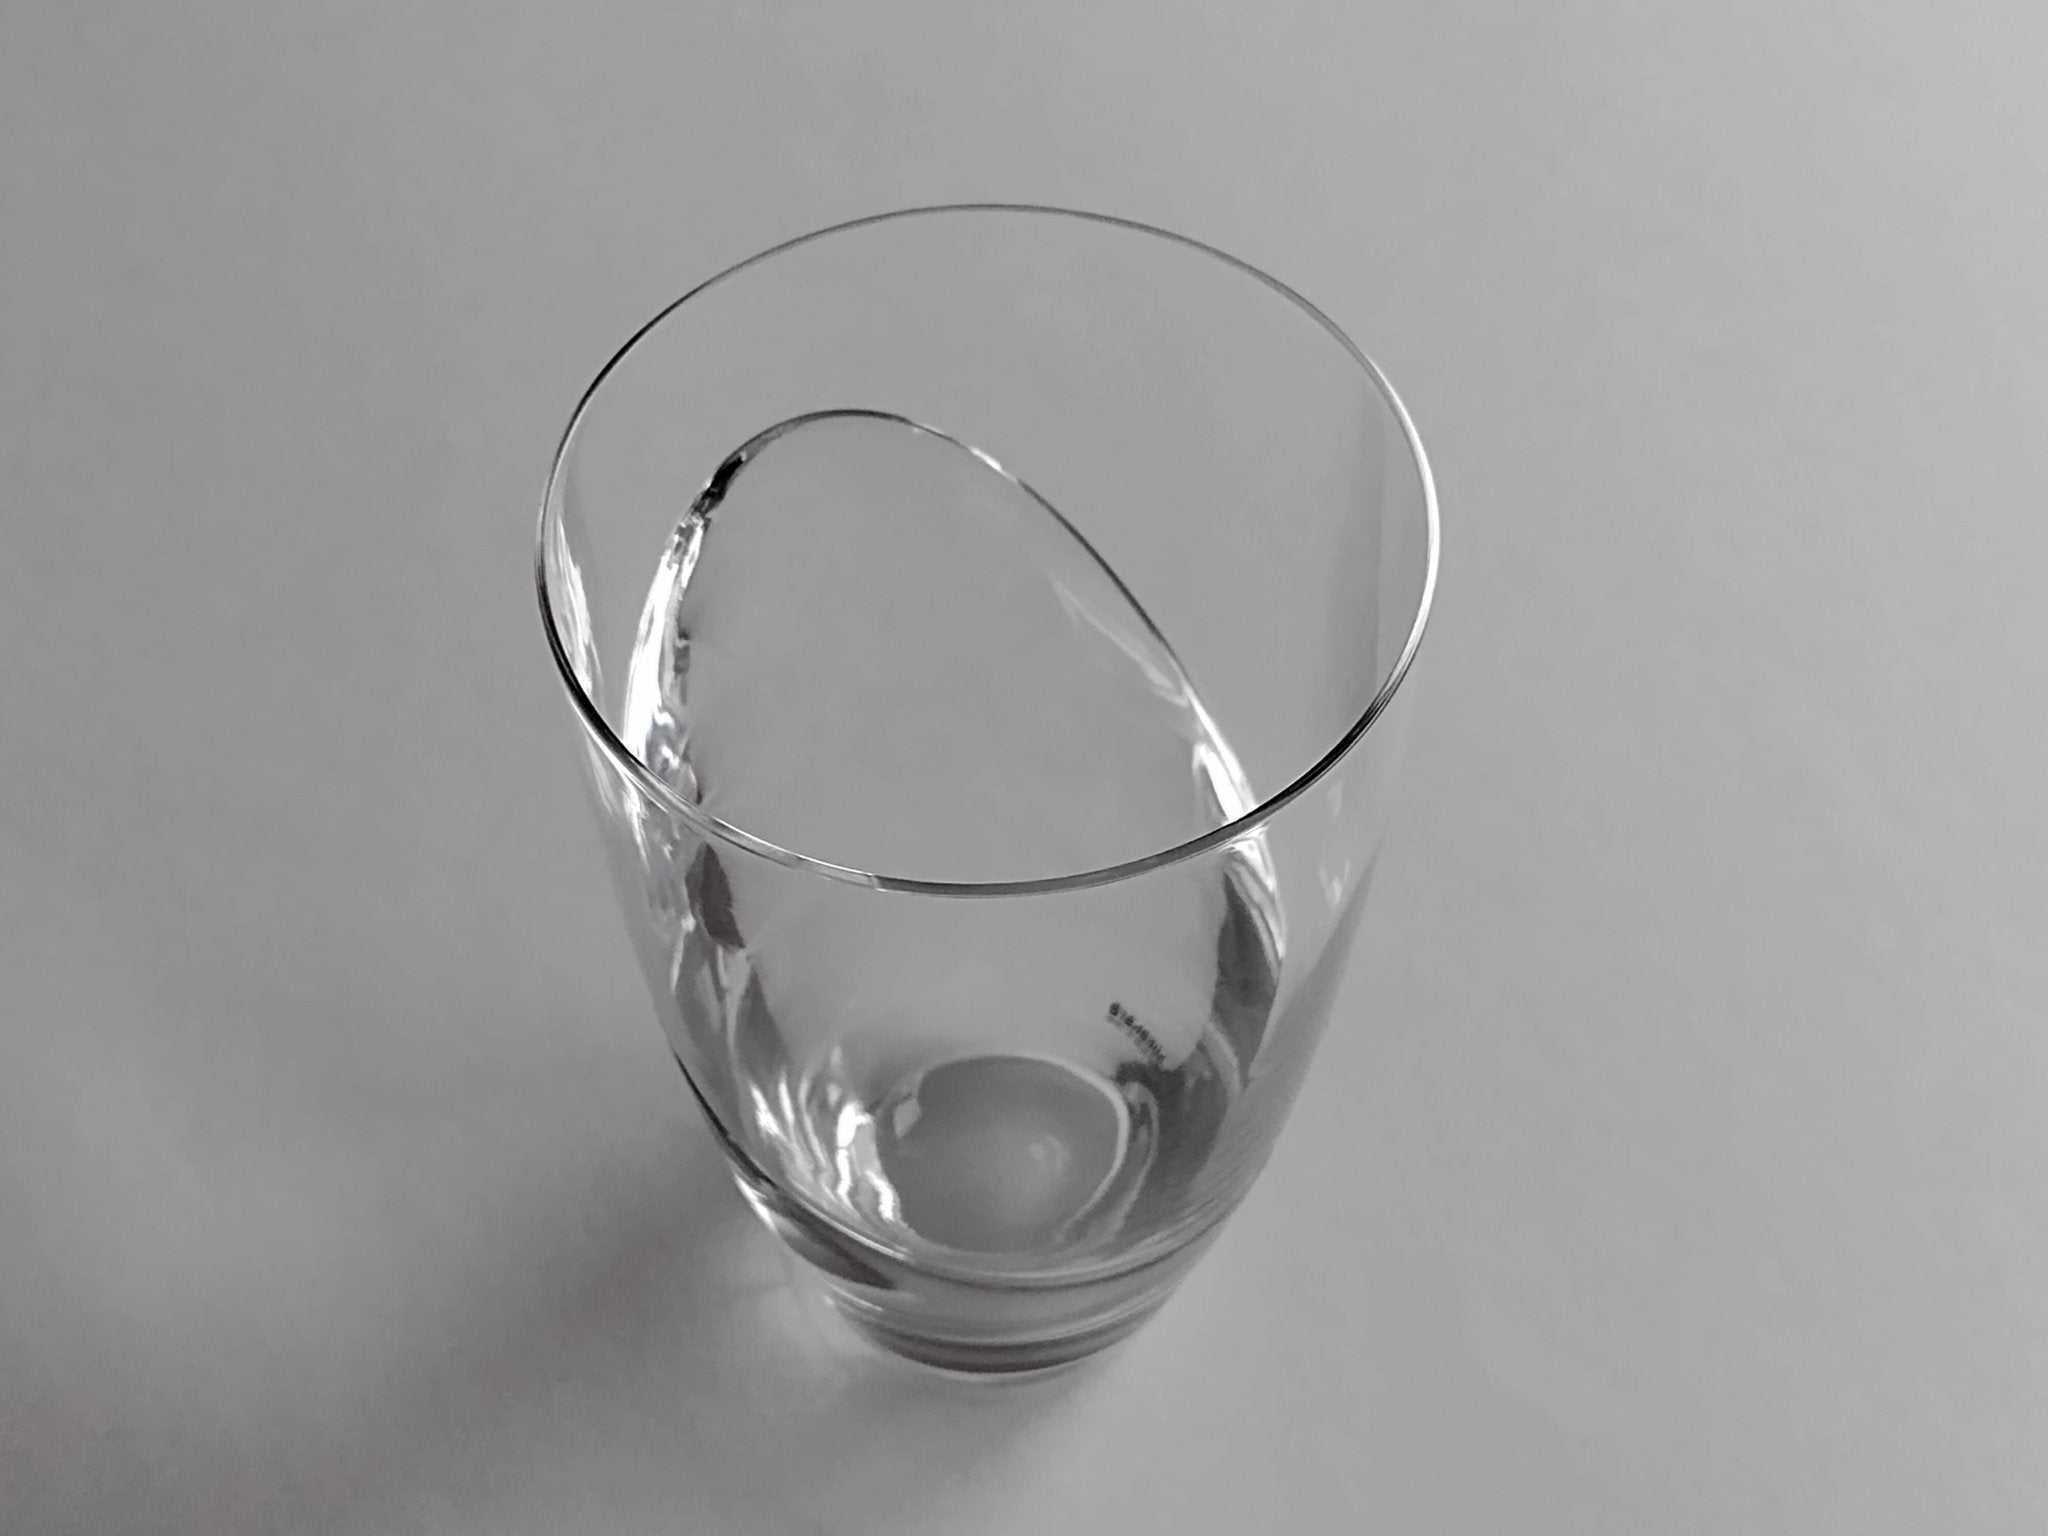 Sugahara-Cascade 360ml longdrink glas - Schreuder-kraan.shop